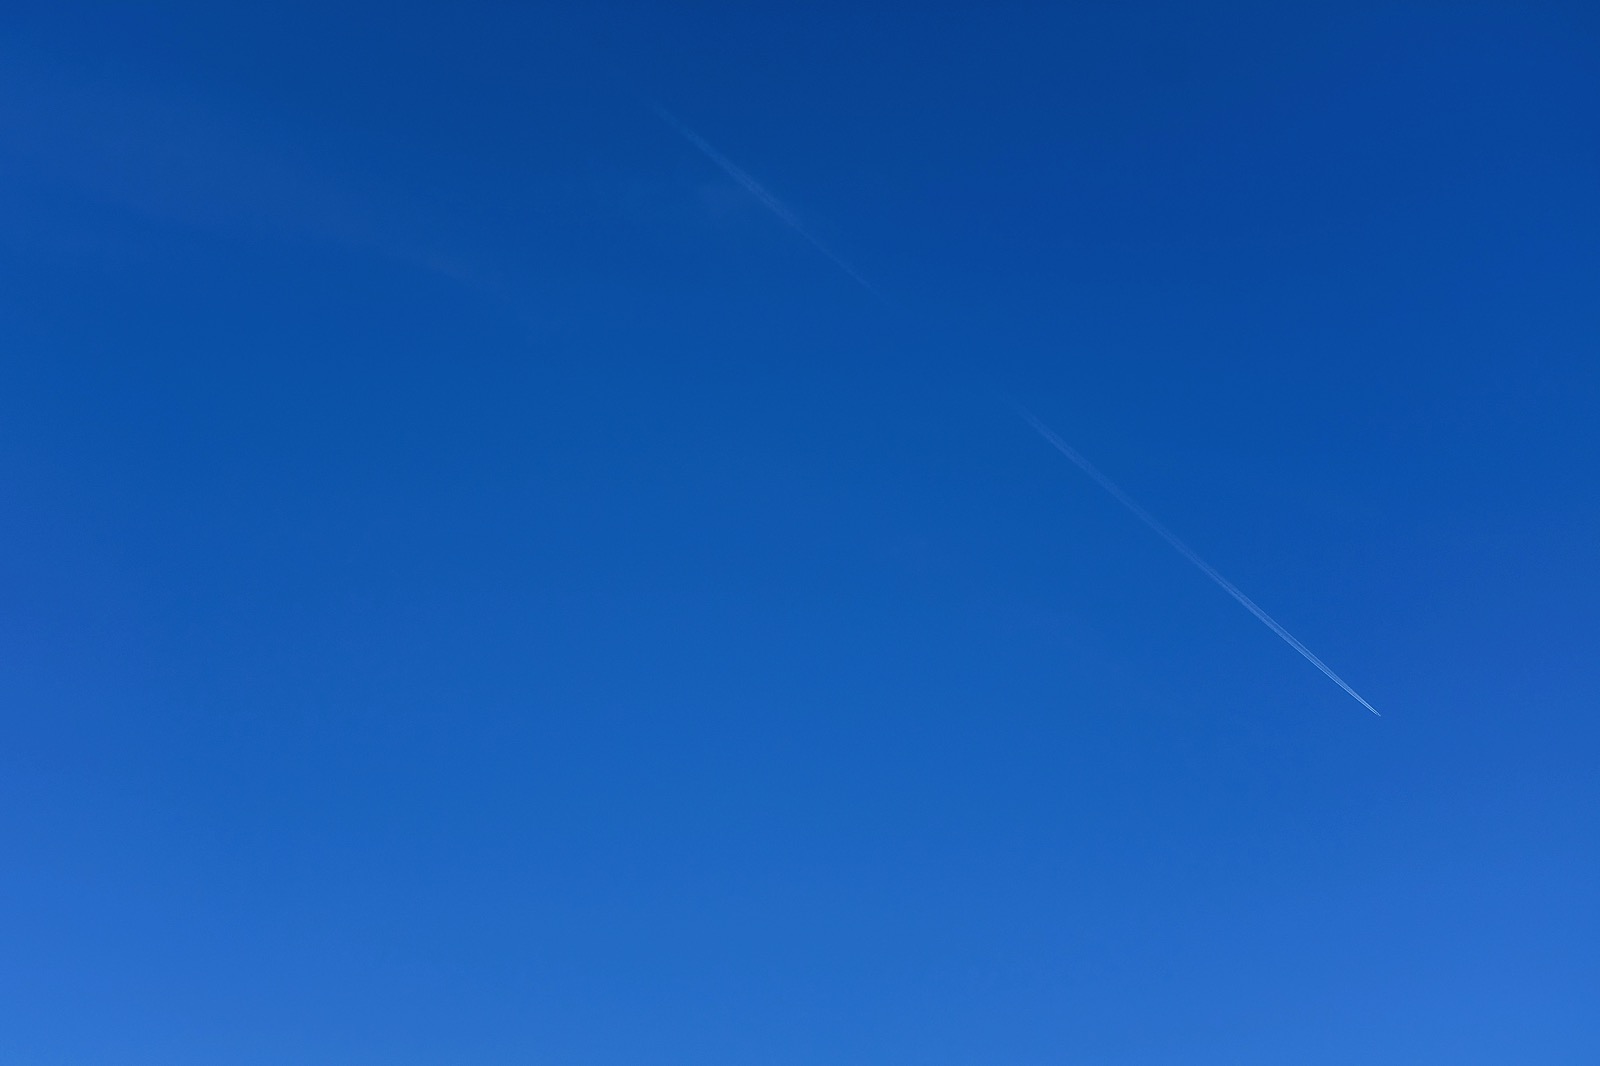 airplane trail against bright blue sky